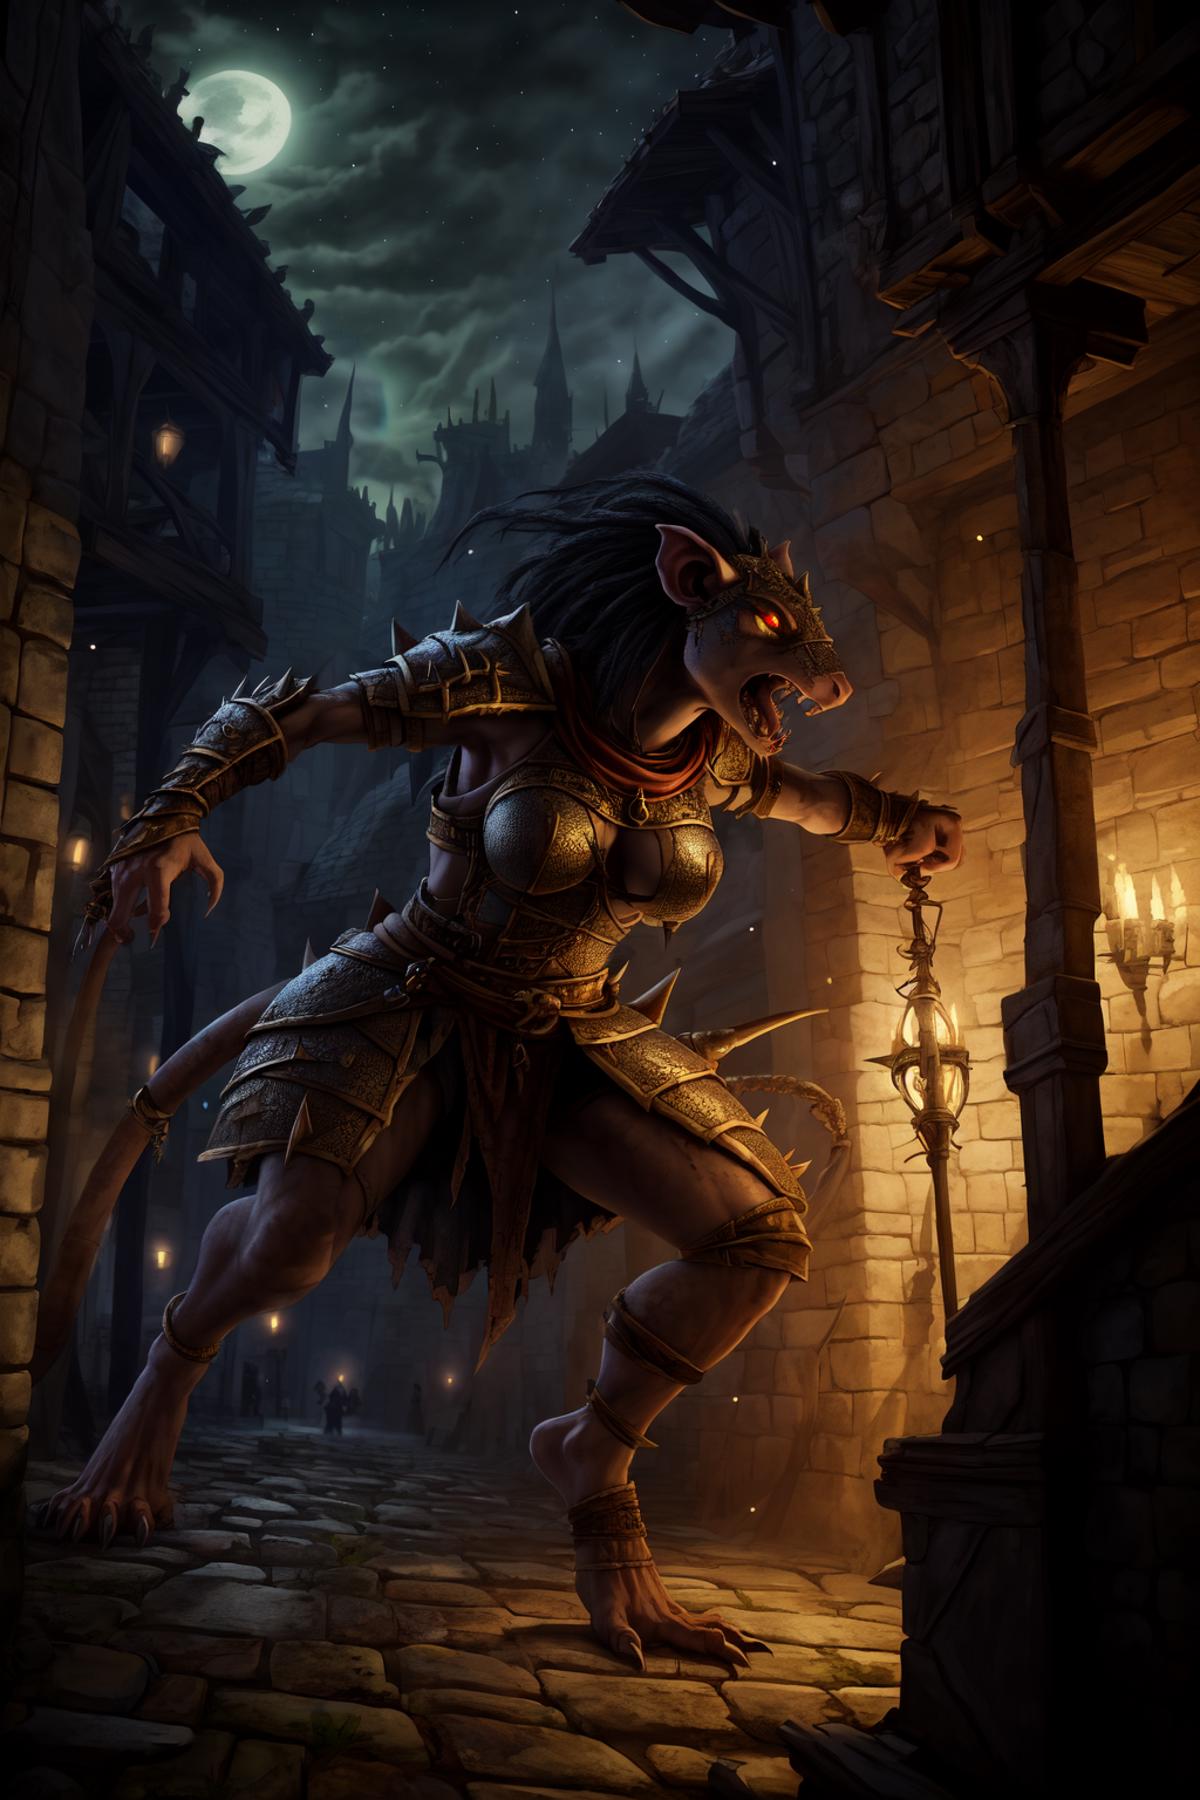 Skaven (Warhammer) image by Nivrax